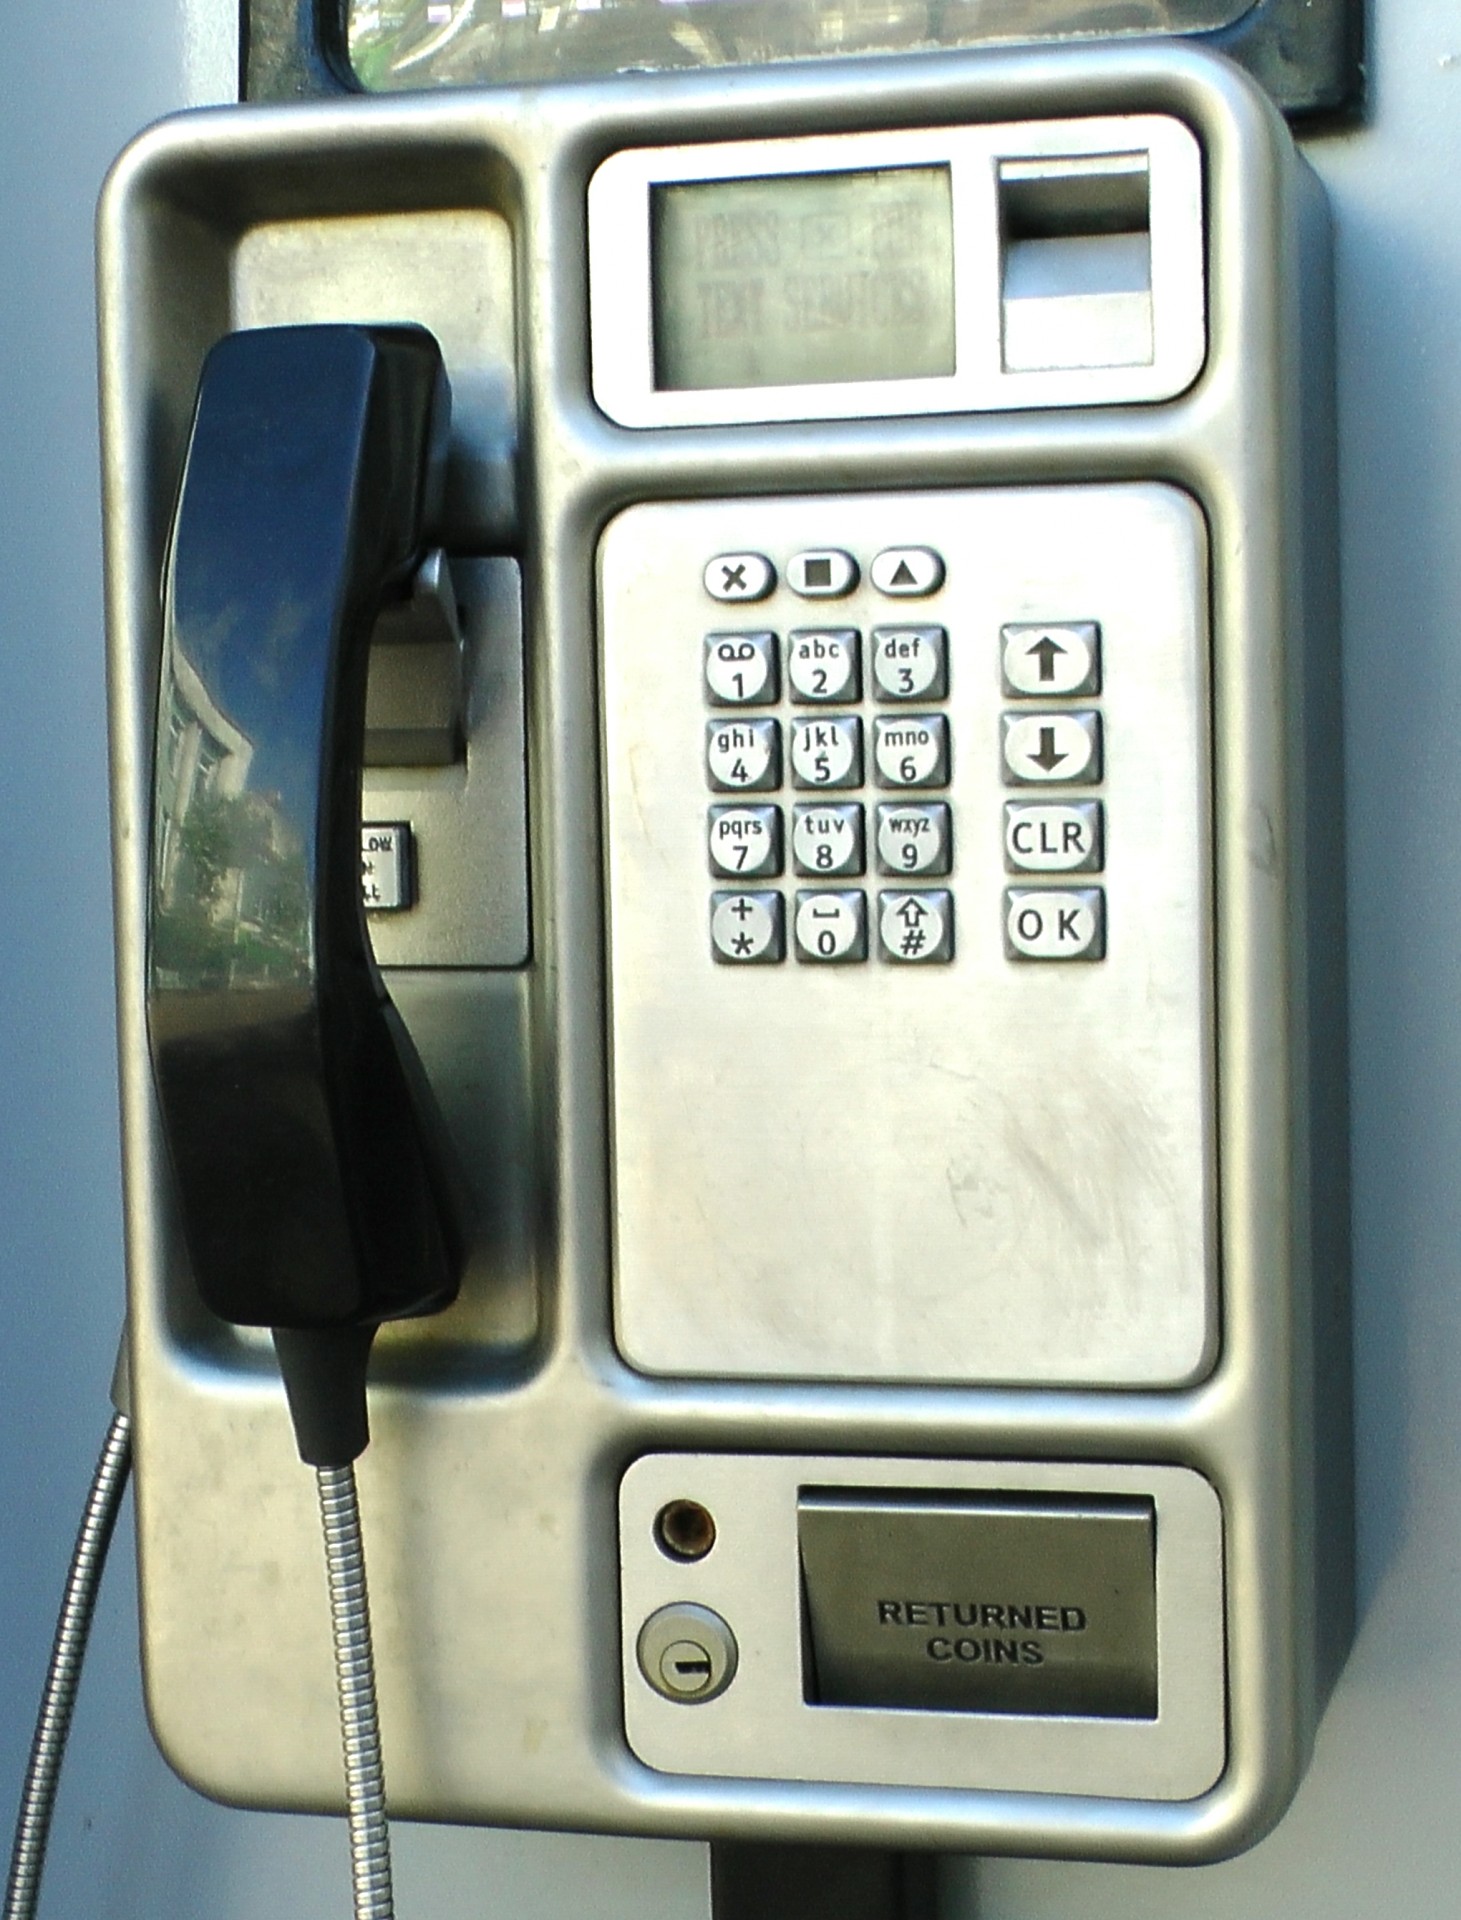 telephone public telephone phone call booth telephones free photo